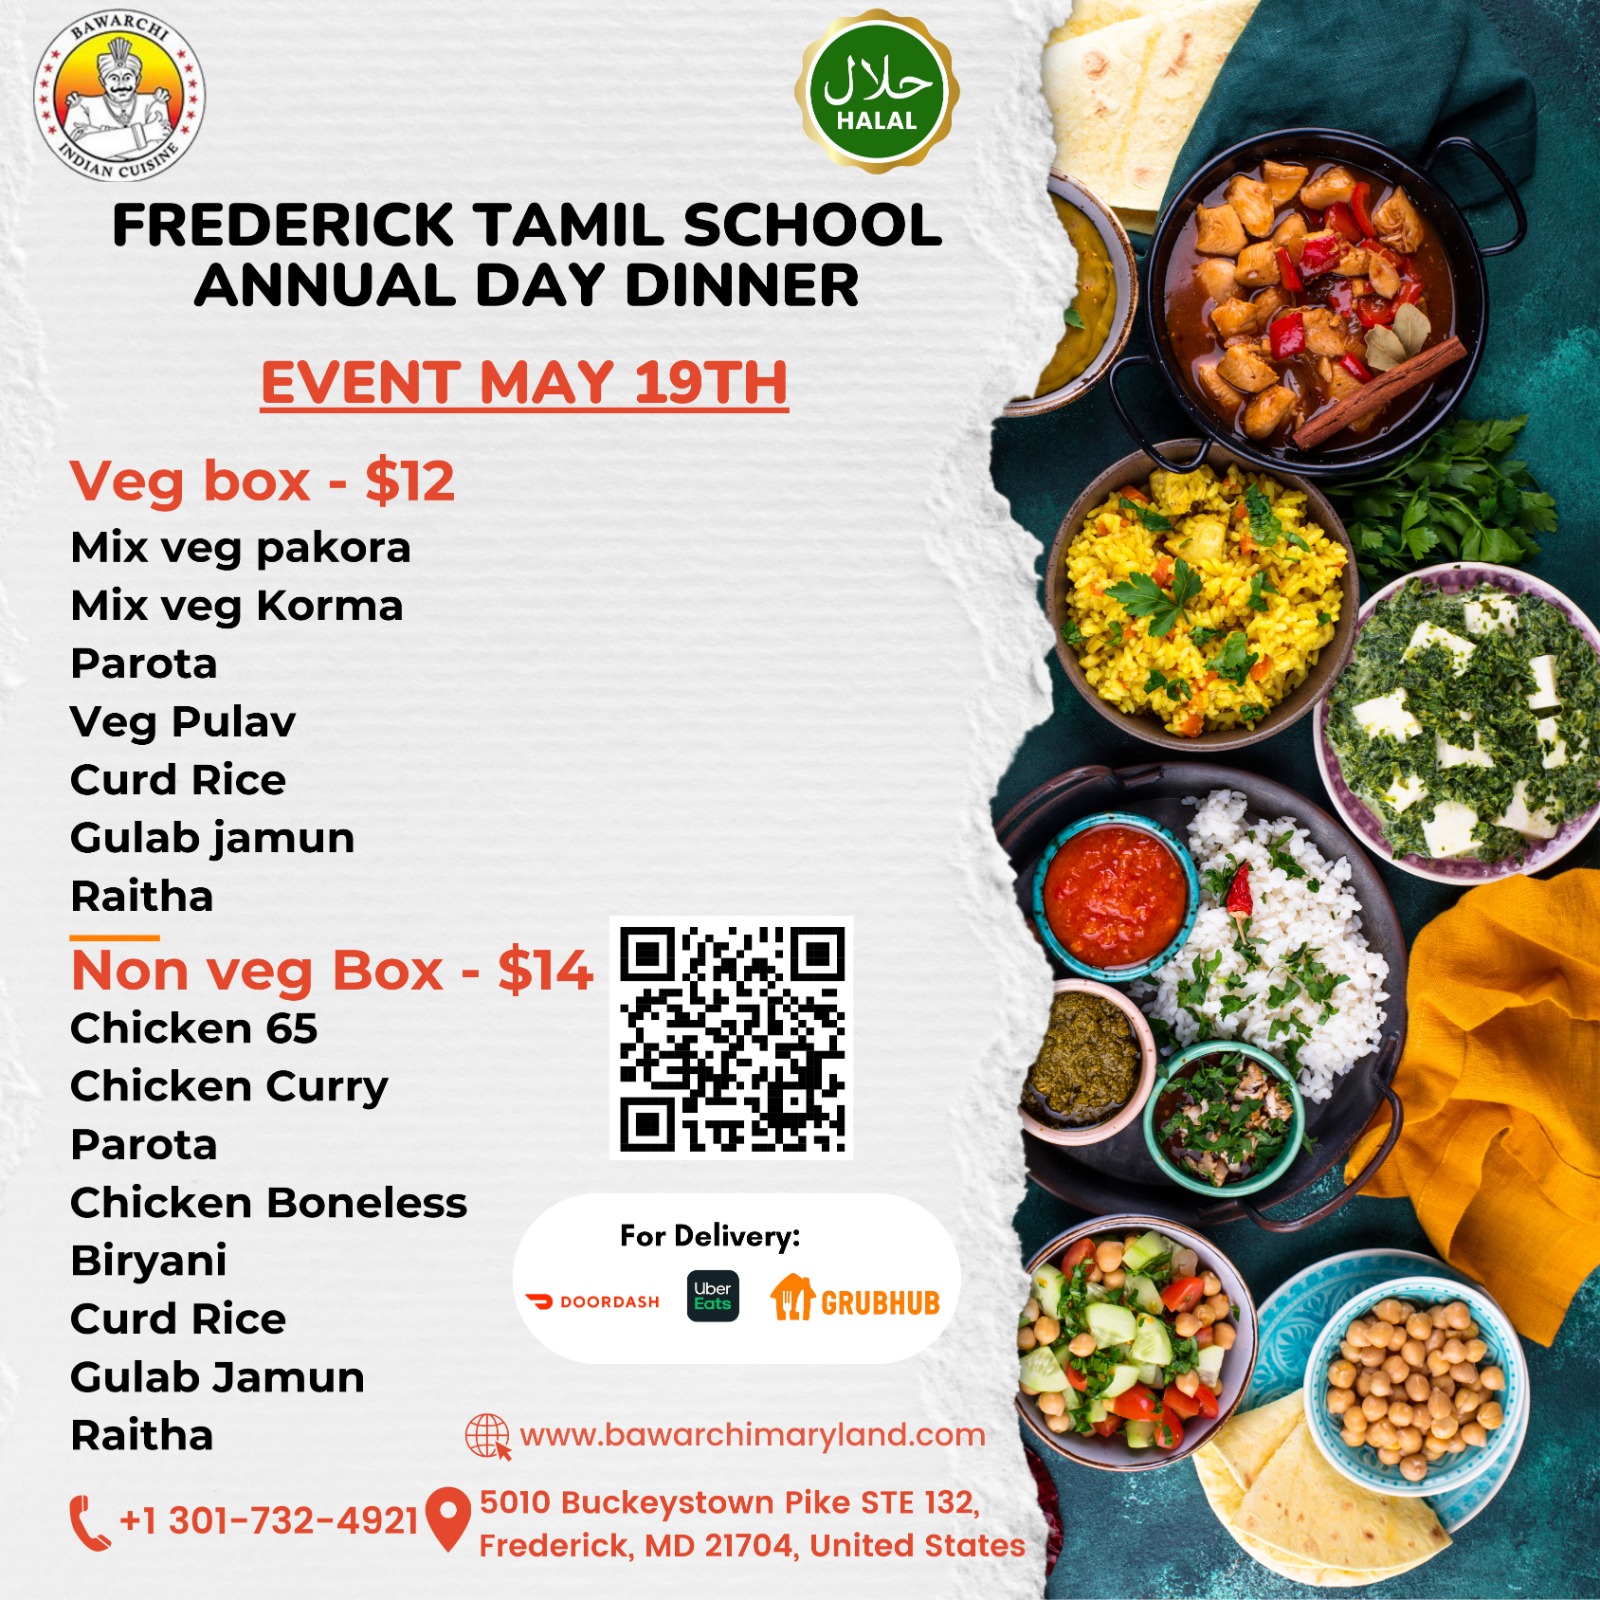 Fredrick Tamil School Annual Day